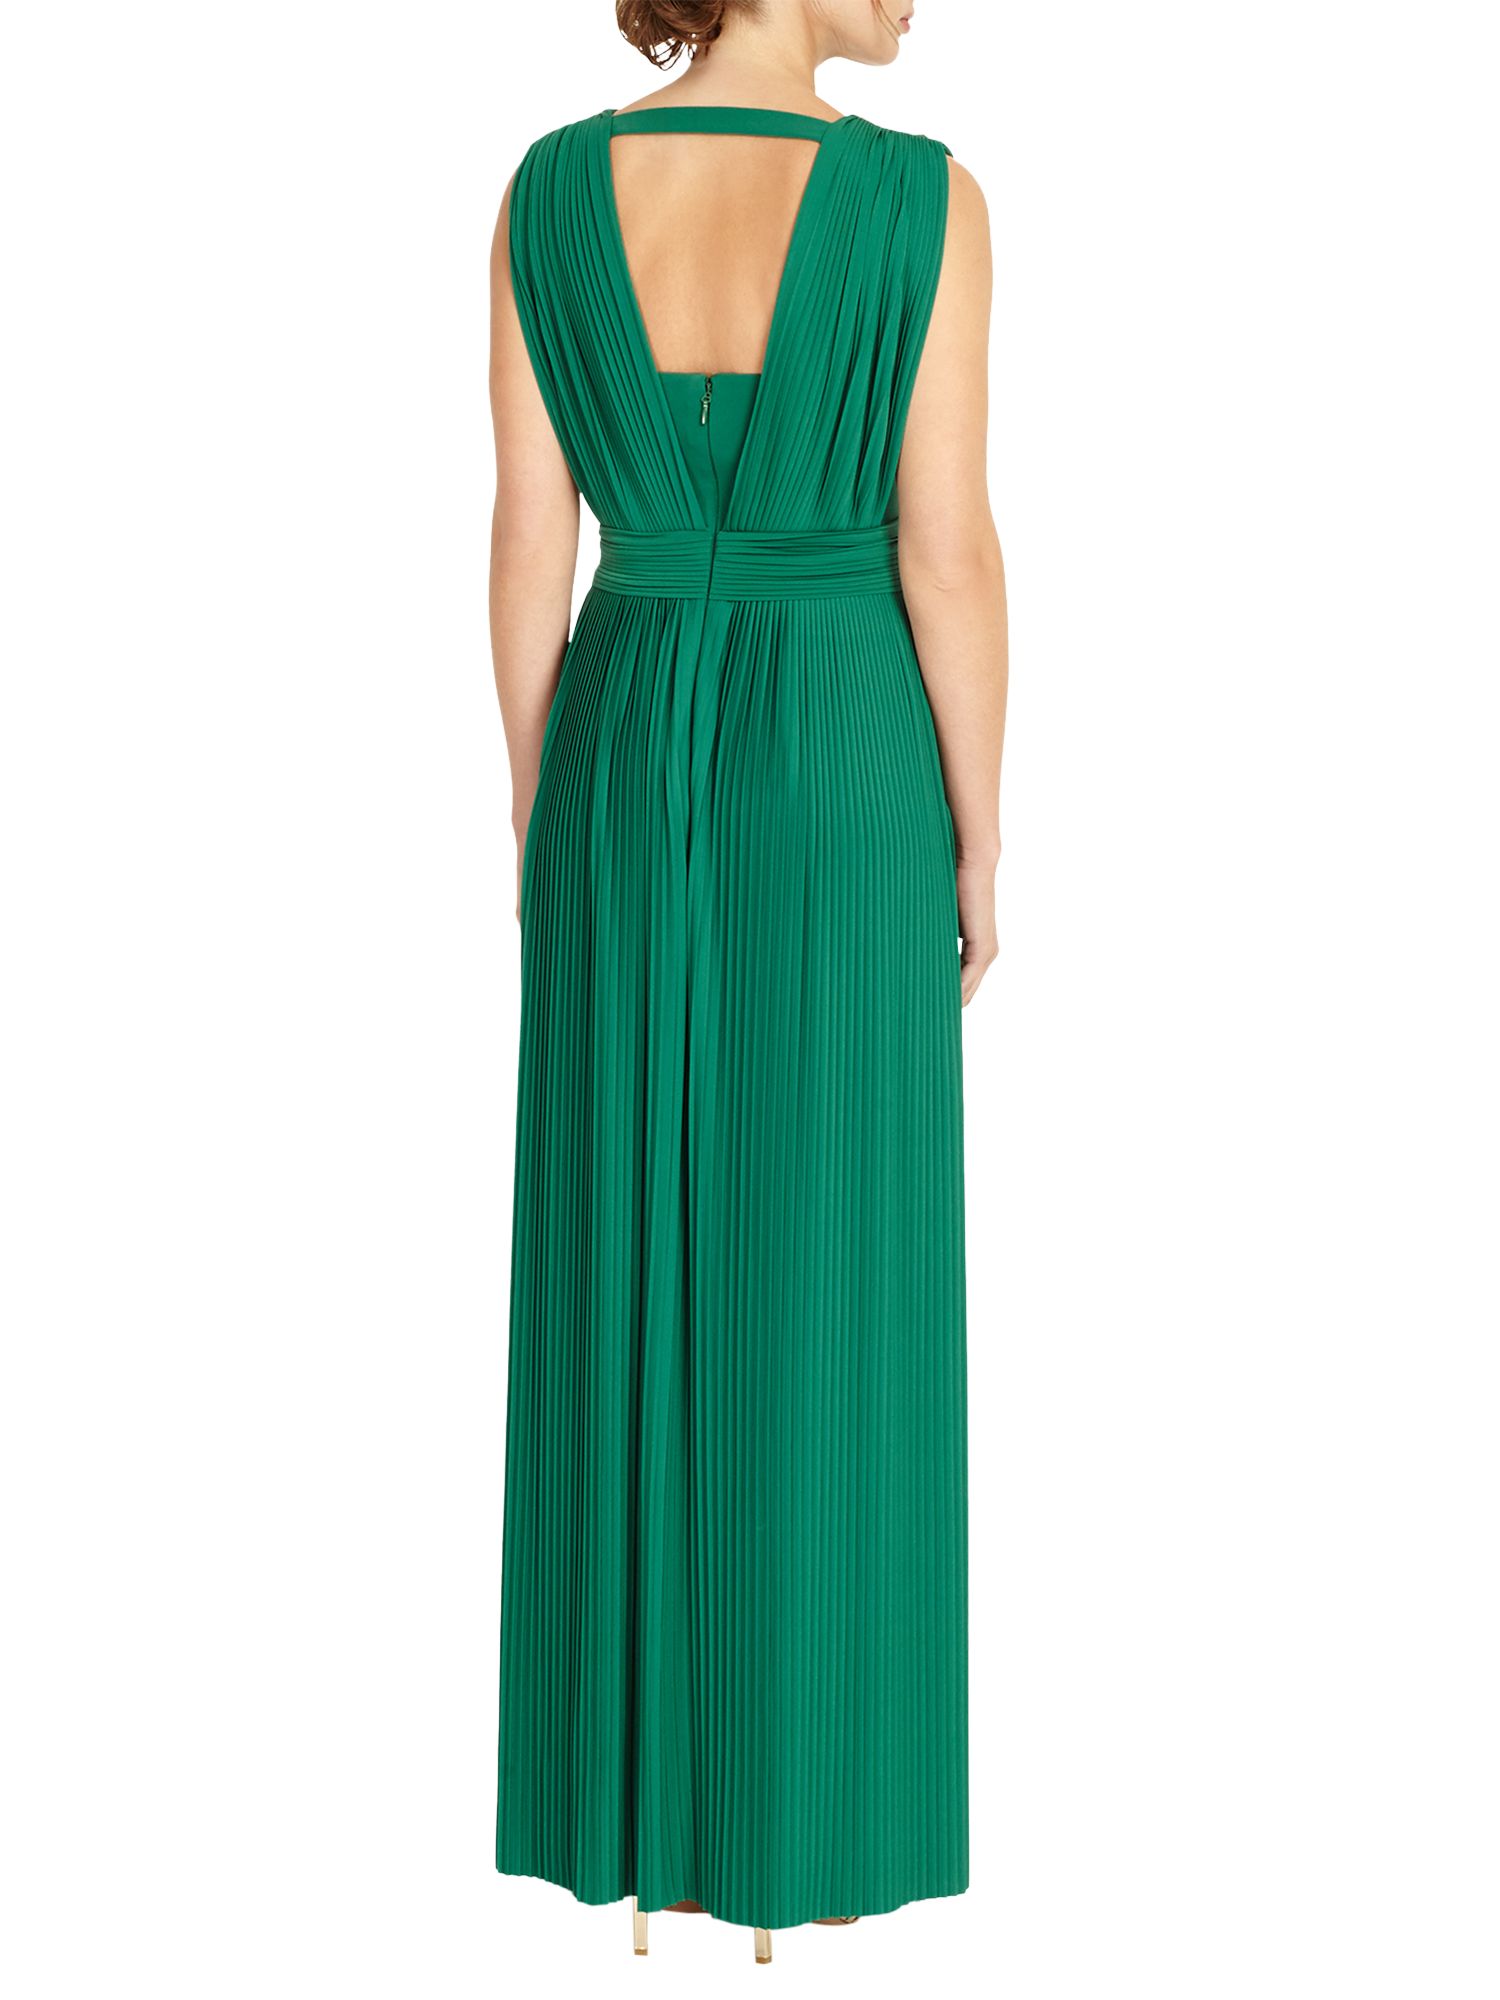 Phase Eight Aldora Pleat Dress, Emerald